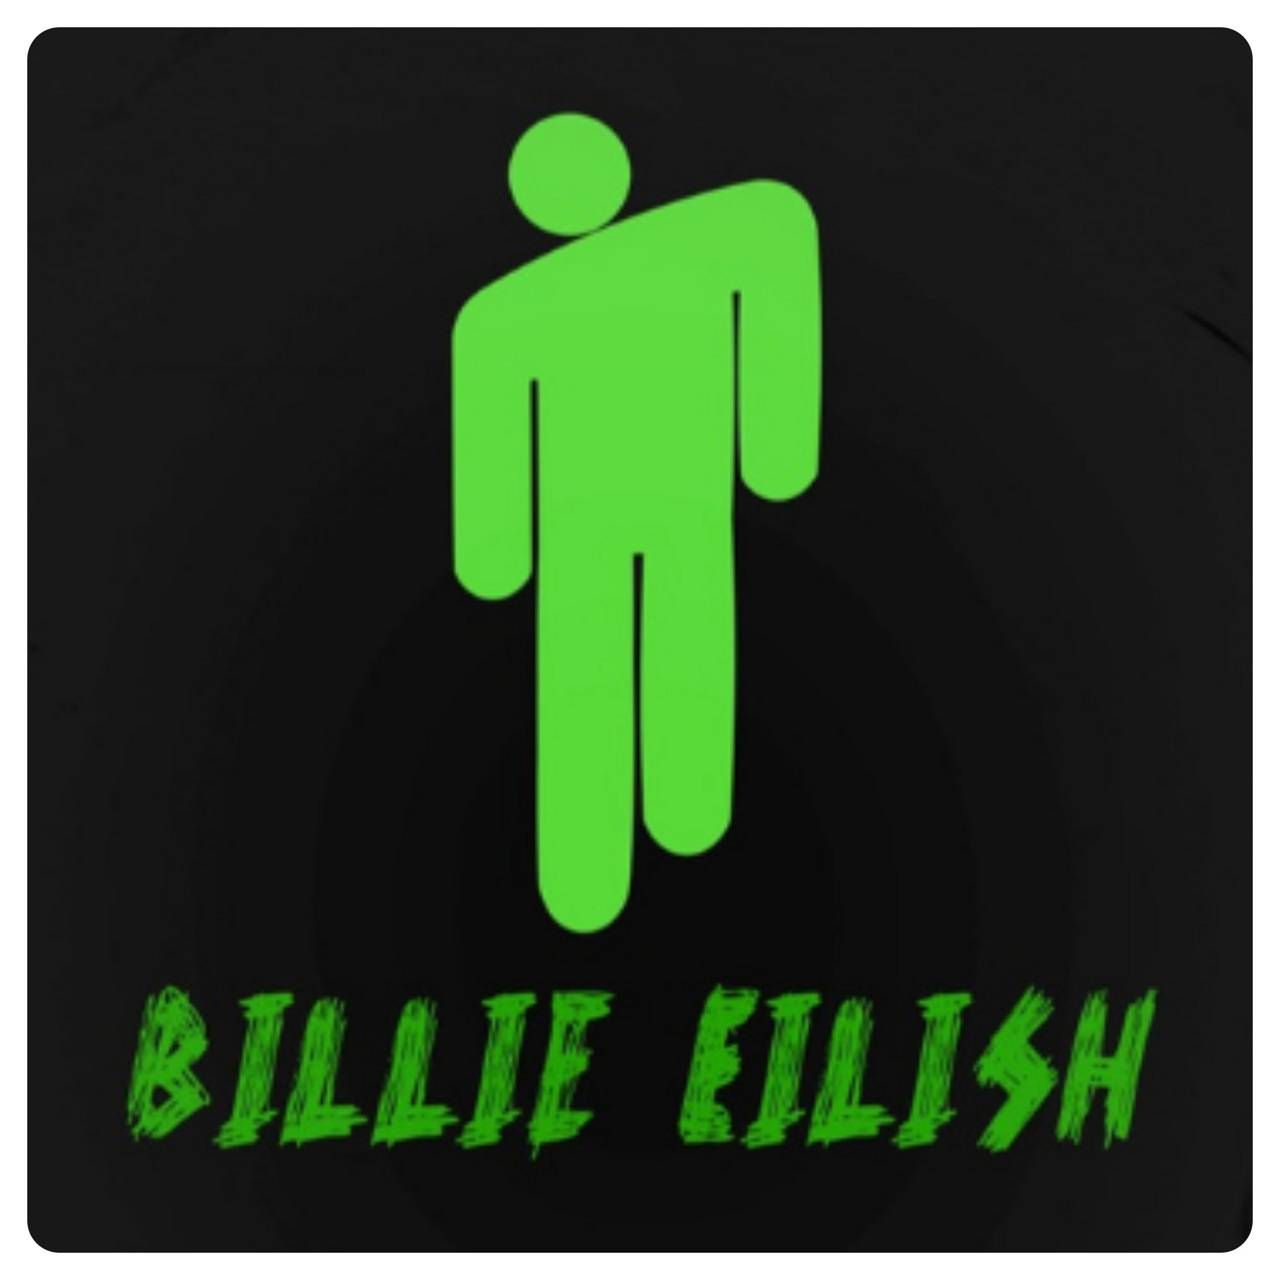 Billie Eilish Logo Wallpaper Green And Black - vrogue.co